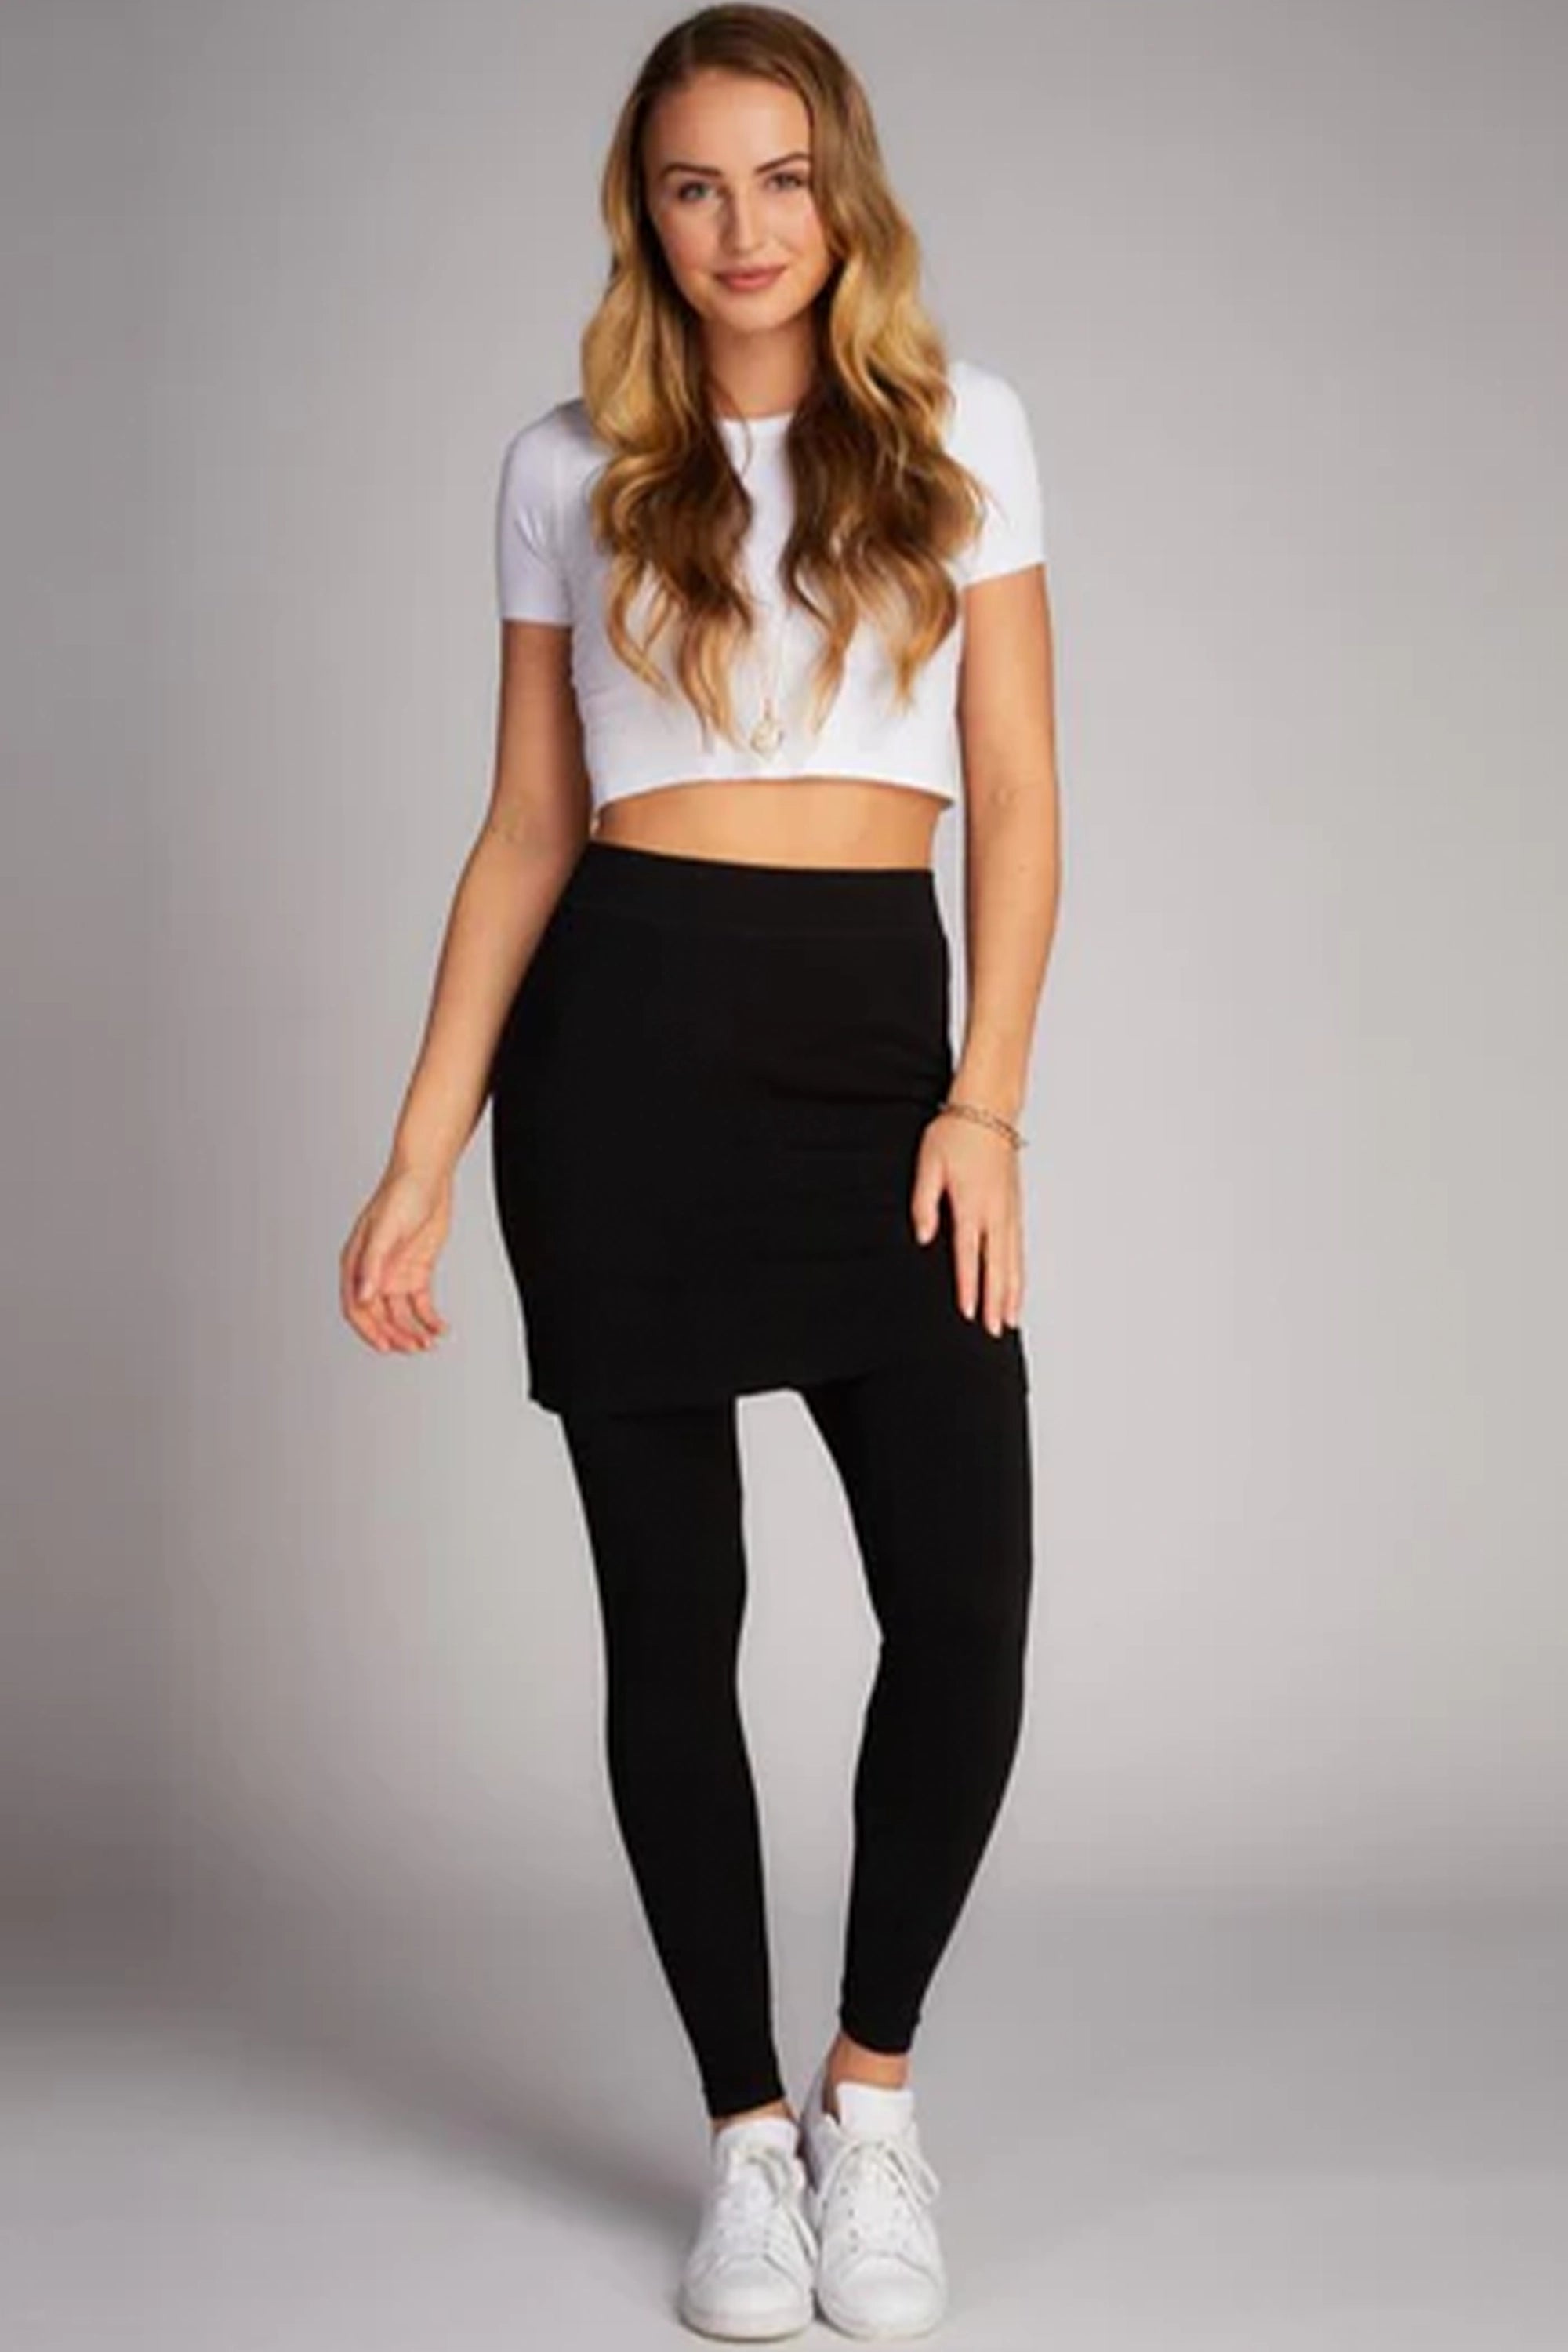 Zara Black Skirt w Attached Leggings, medium | eBay